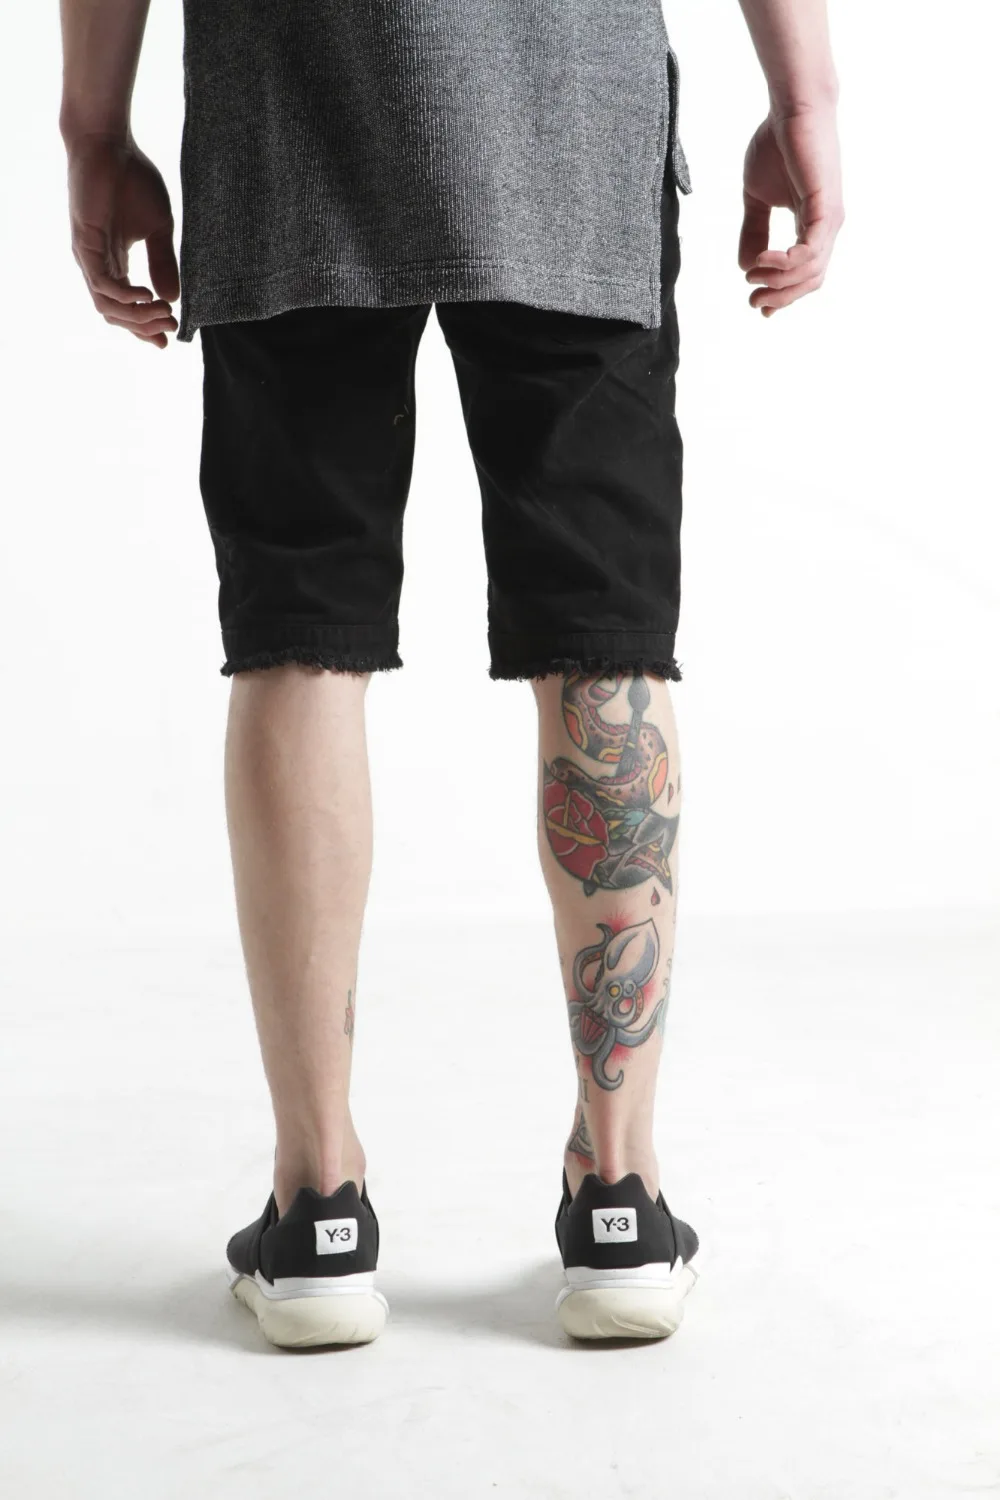 black biker jean shorts